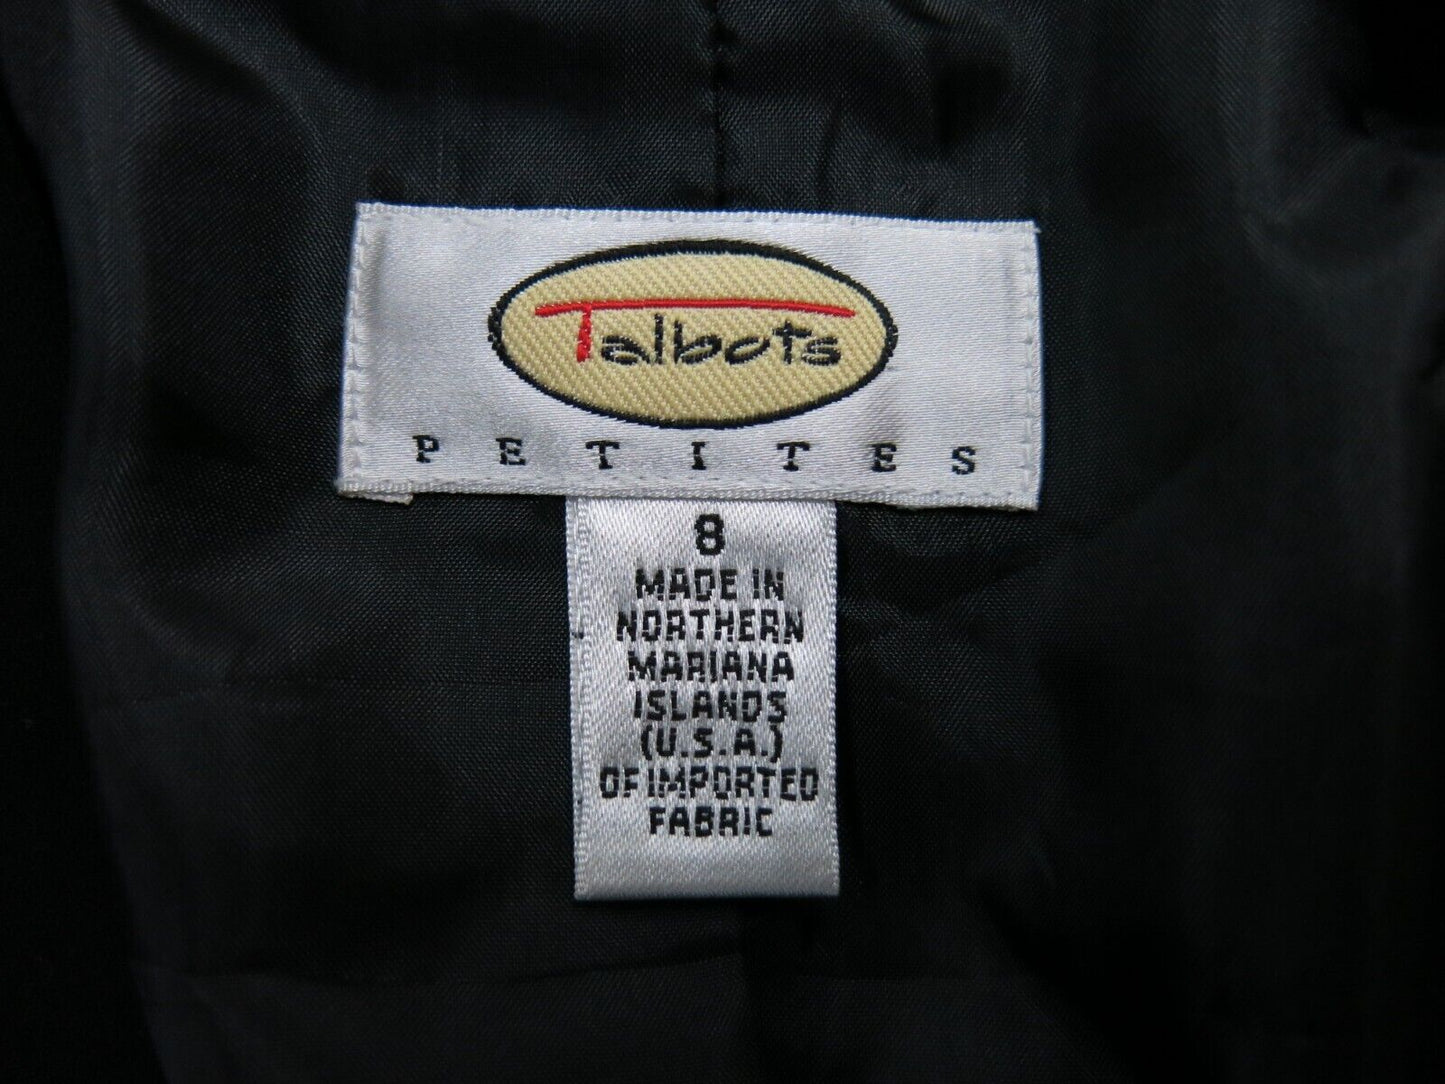 Talbots Mens Blazer Coat Jacket Front Button Pockets Black Size Petites 8